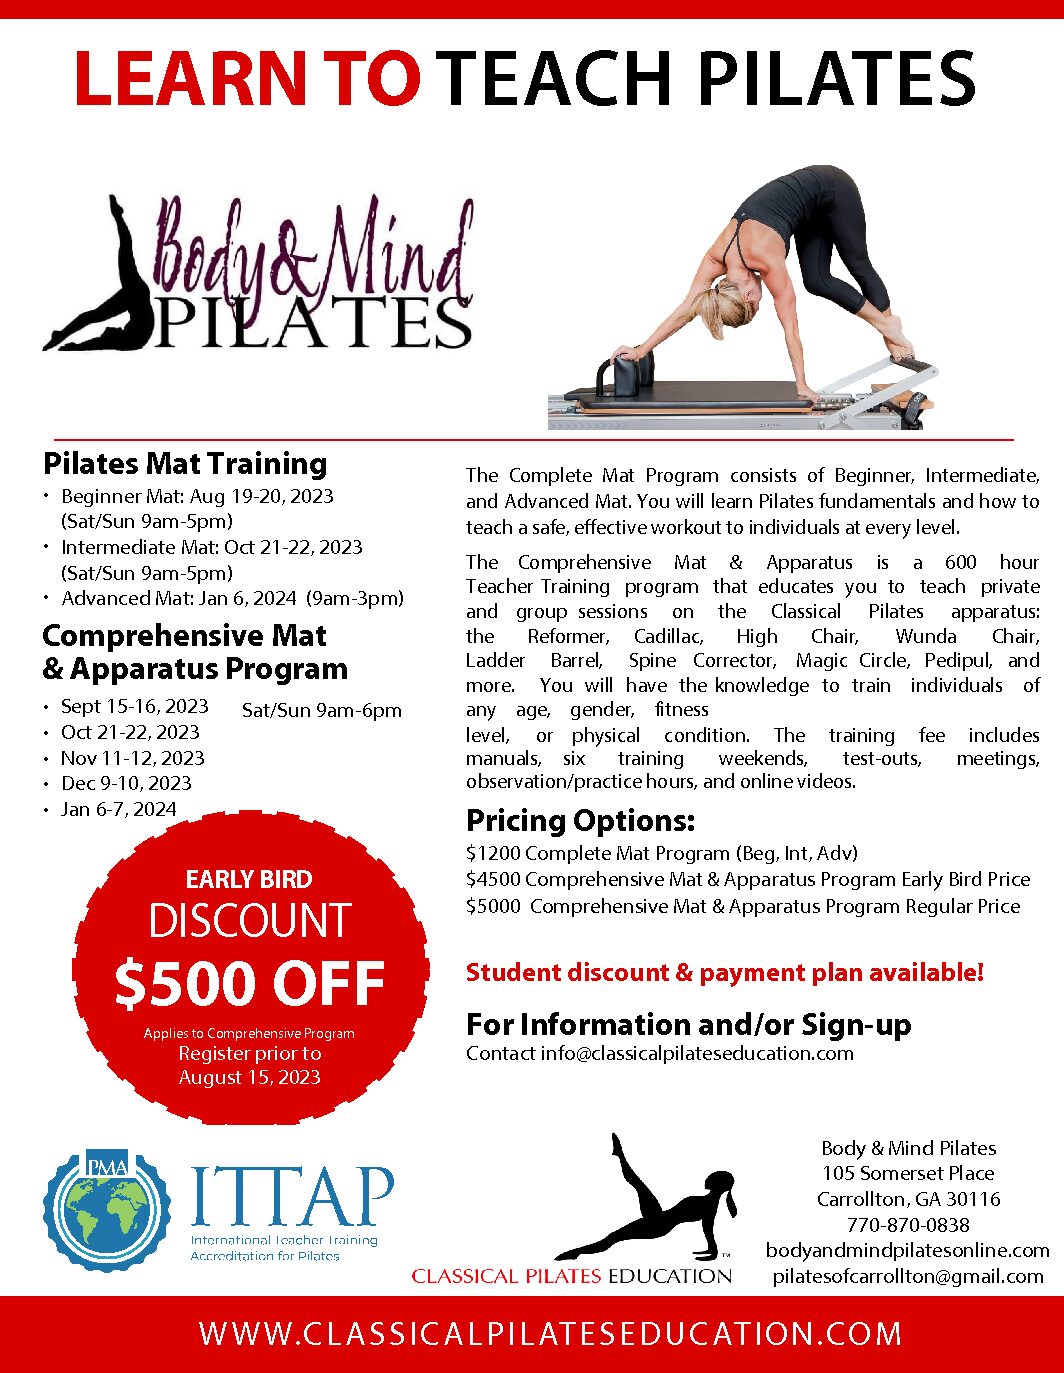 Body & Mind Pilates, Carrollton, GA​